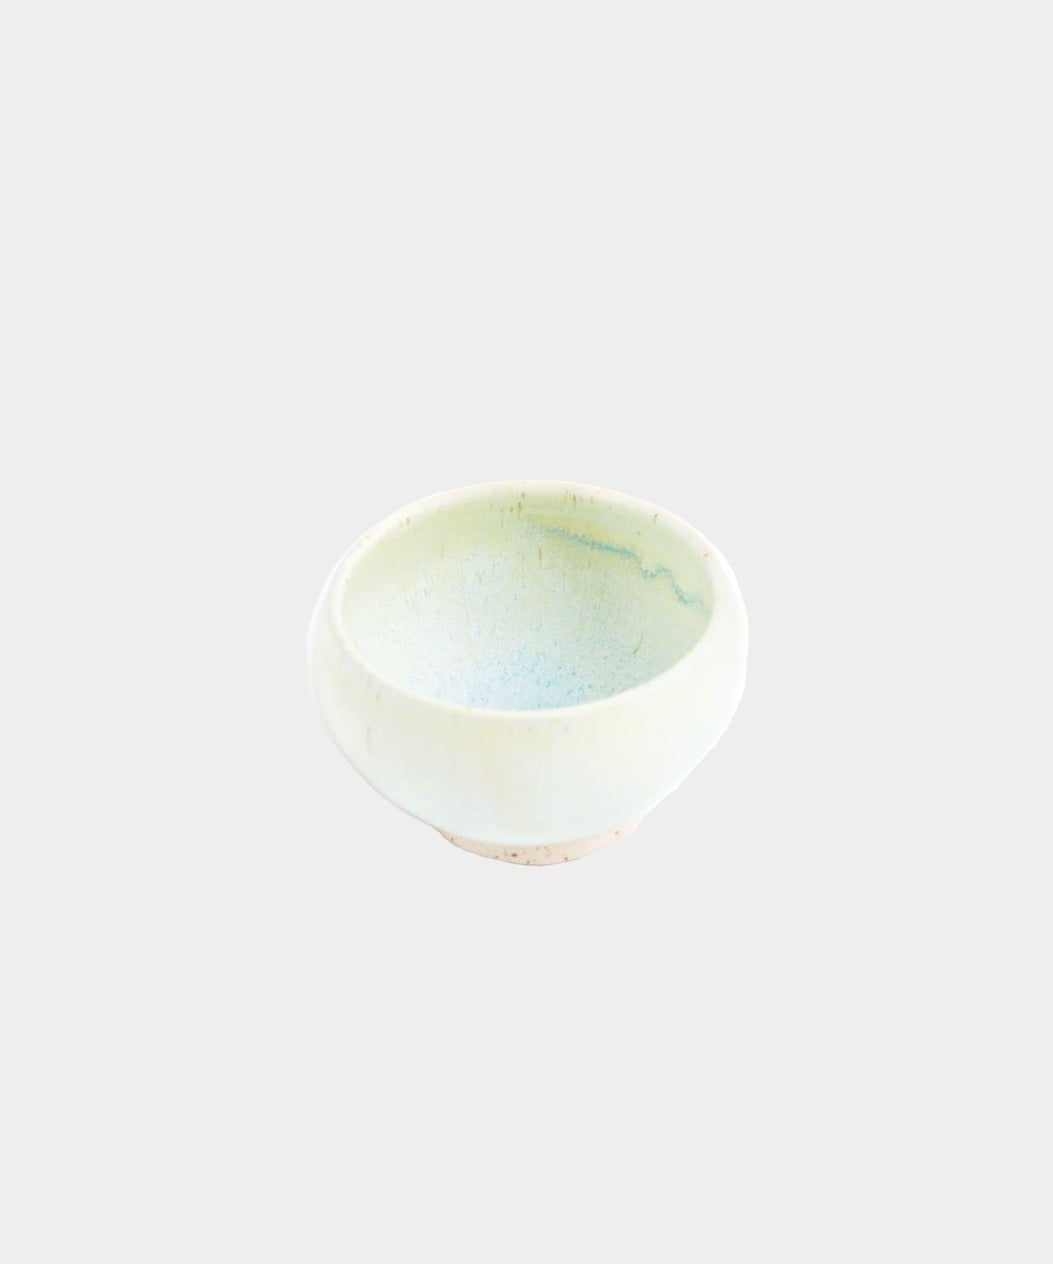 Håndlavet Keramik Nøddeskål | AQUA by Vang | Kerama 2